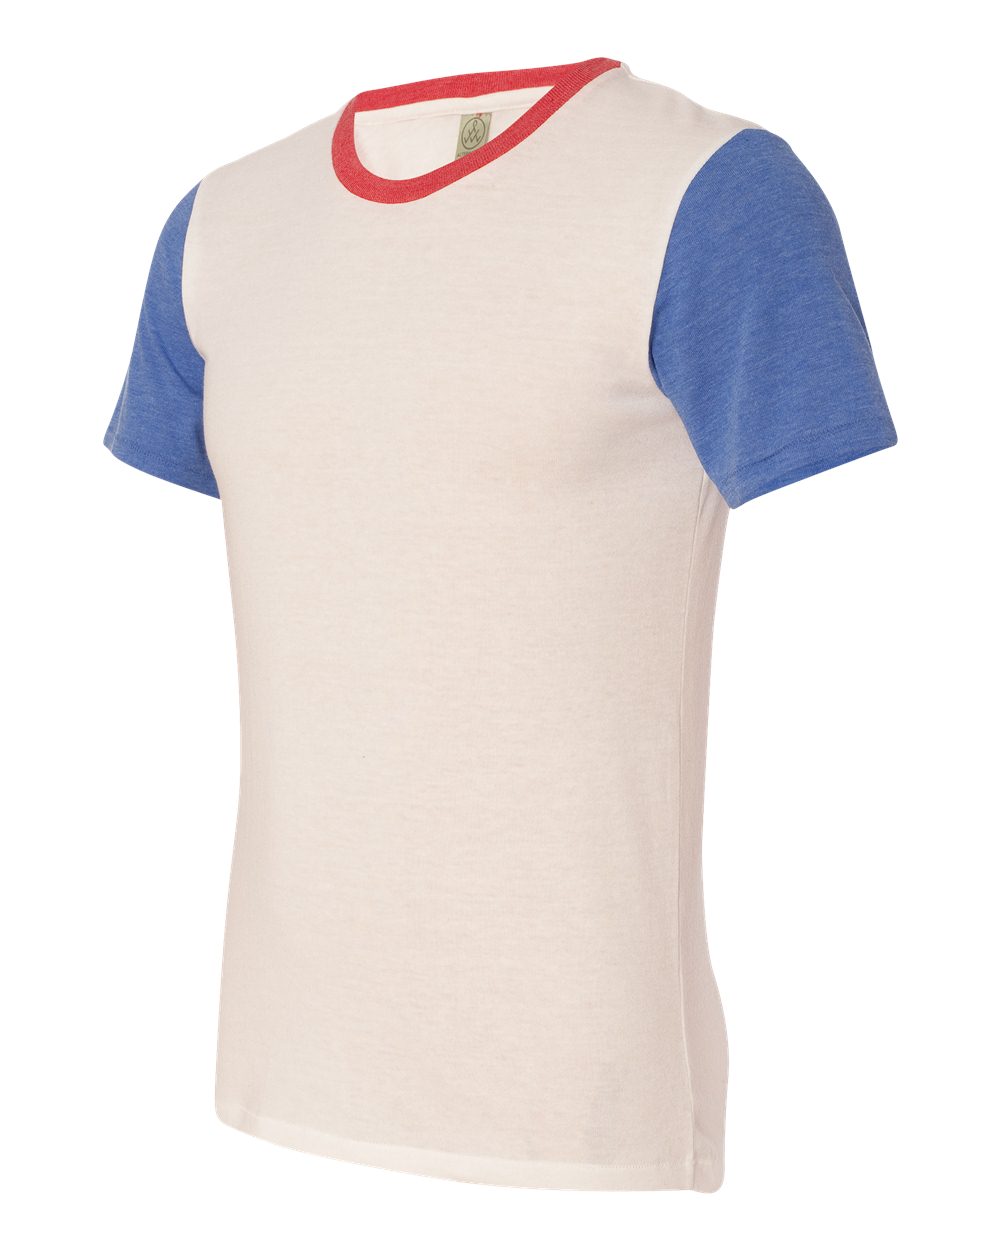 Alternative 1935e1 - Eco-Jersey Colorblock Crewneck T-Shirt